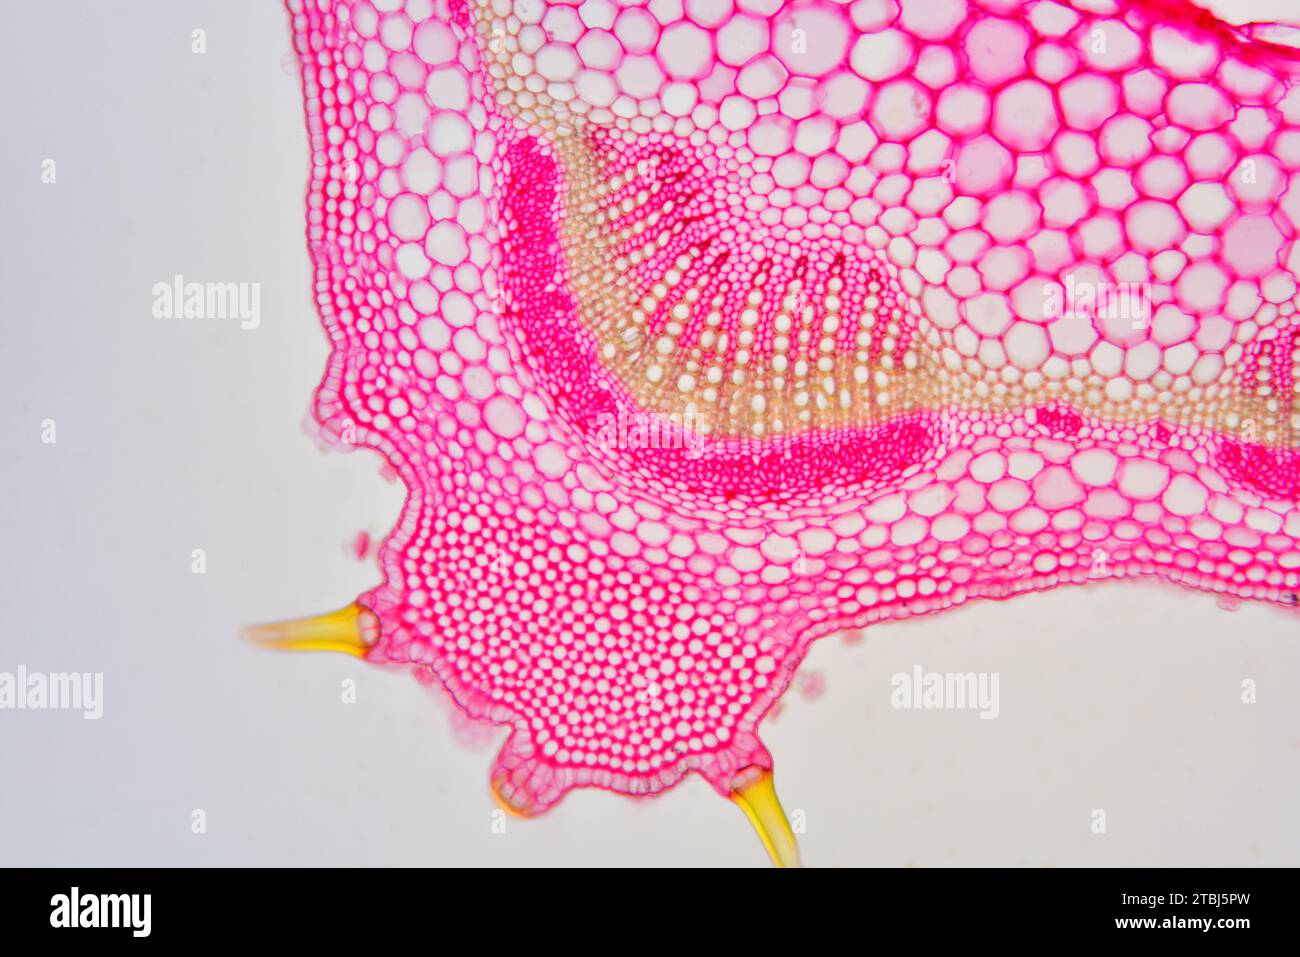 Eudicot stem of Lamiaceae plant showing epidermis, hairs, collenchyma, cortex, parenchyma, vascular bundles, phloem and xylem. Optical microscope X100 Stock Photo